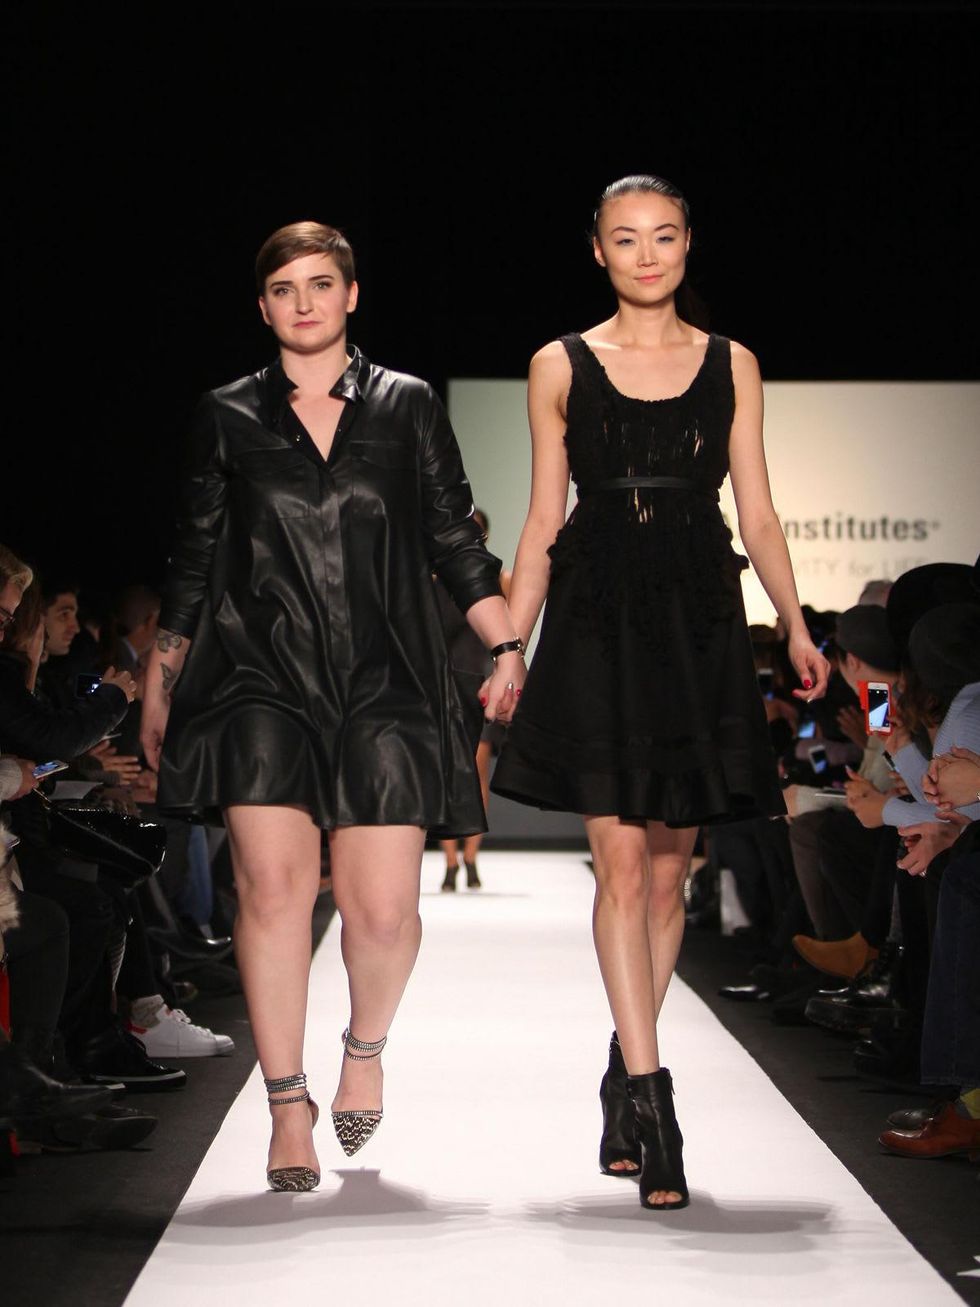 Clifford New York Fashion Week fall 2015 The Art Institutes winners February 2015 Alexa DiBasio designer